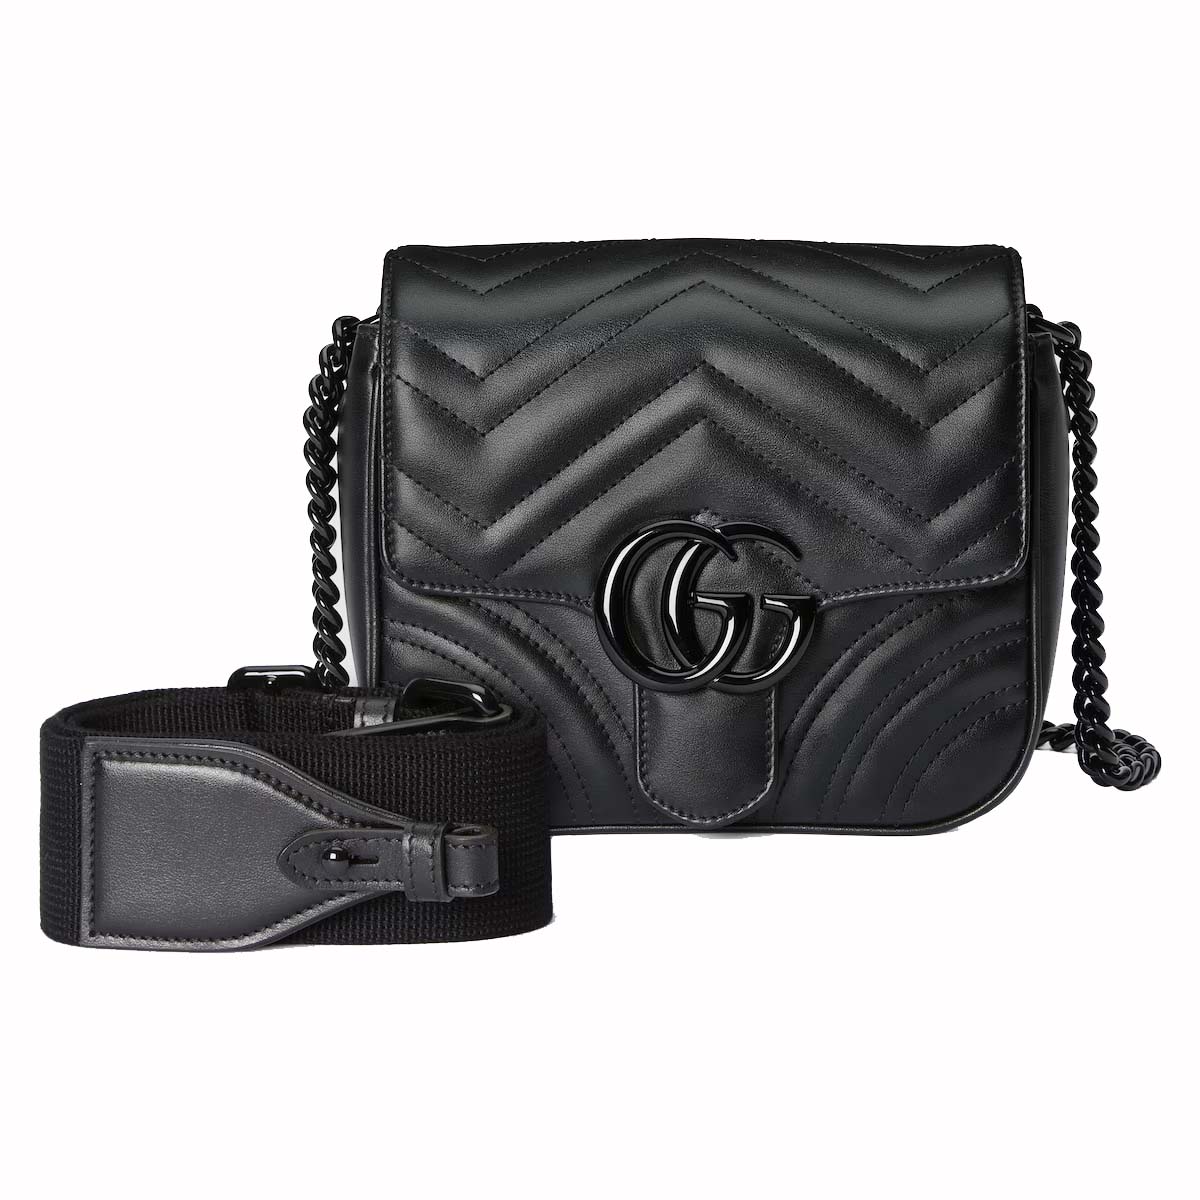 Gg Matelassé Leather Shoulder Bag